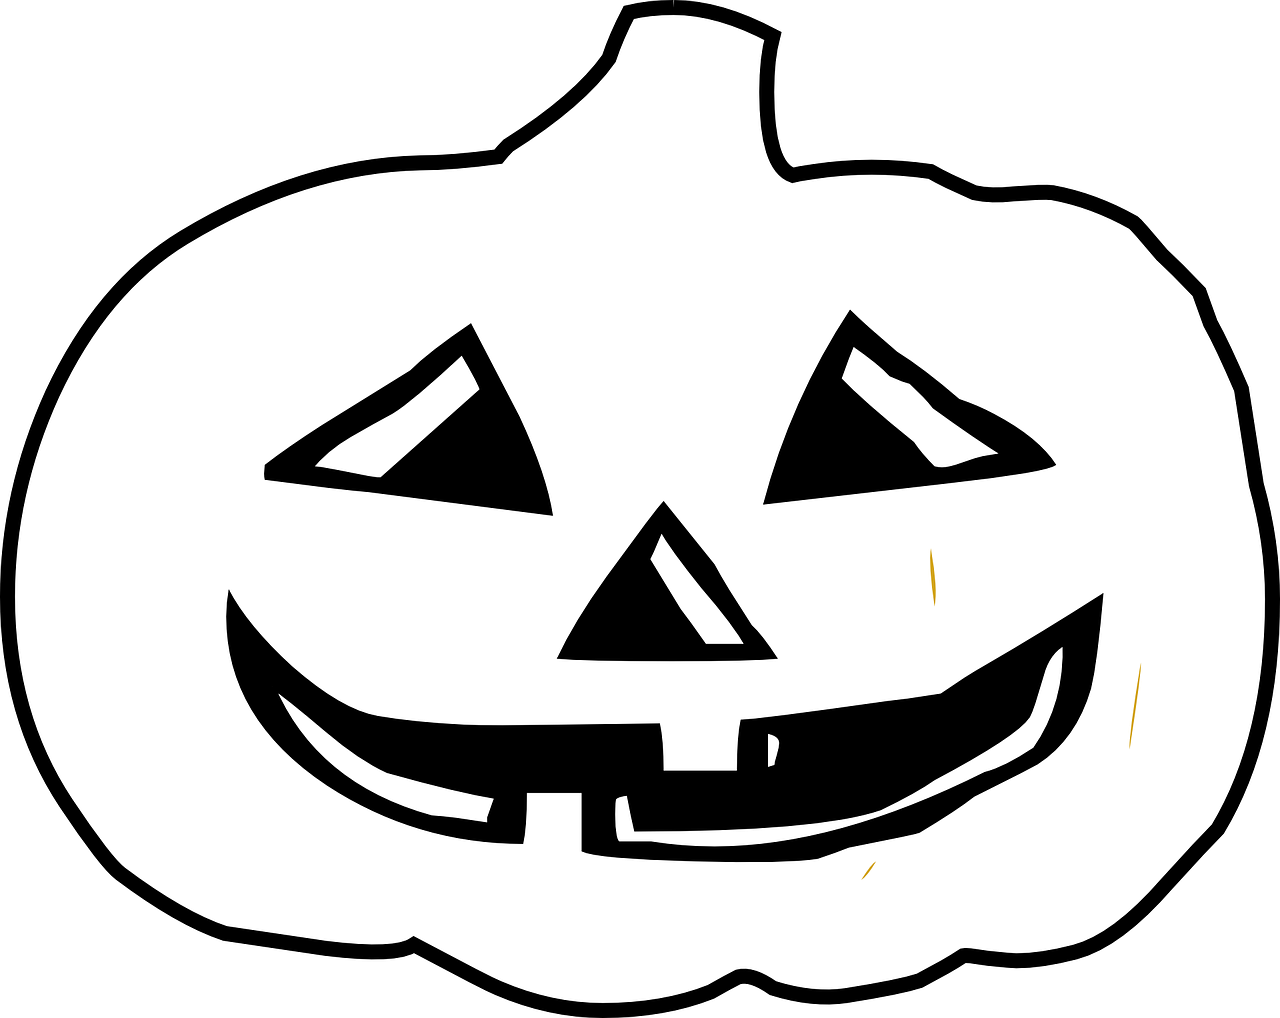 Cara de calabaza de Halloween Imagen Transparente